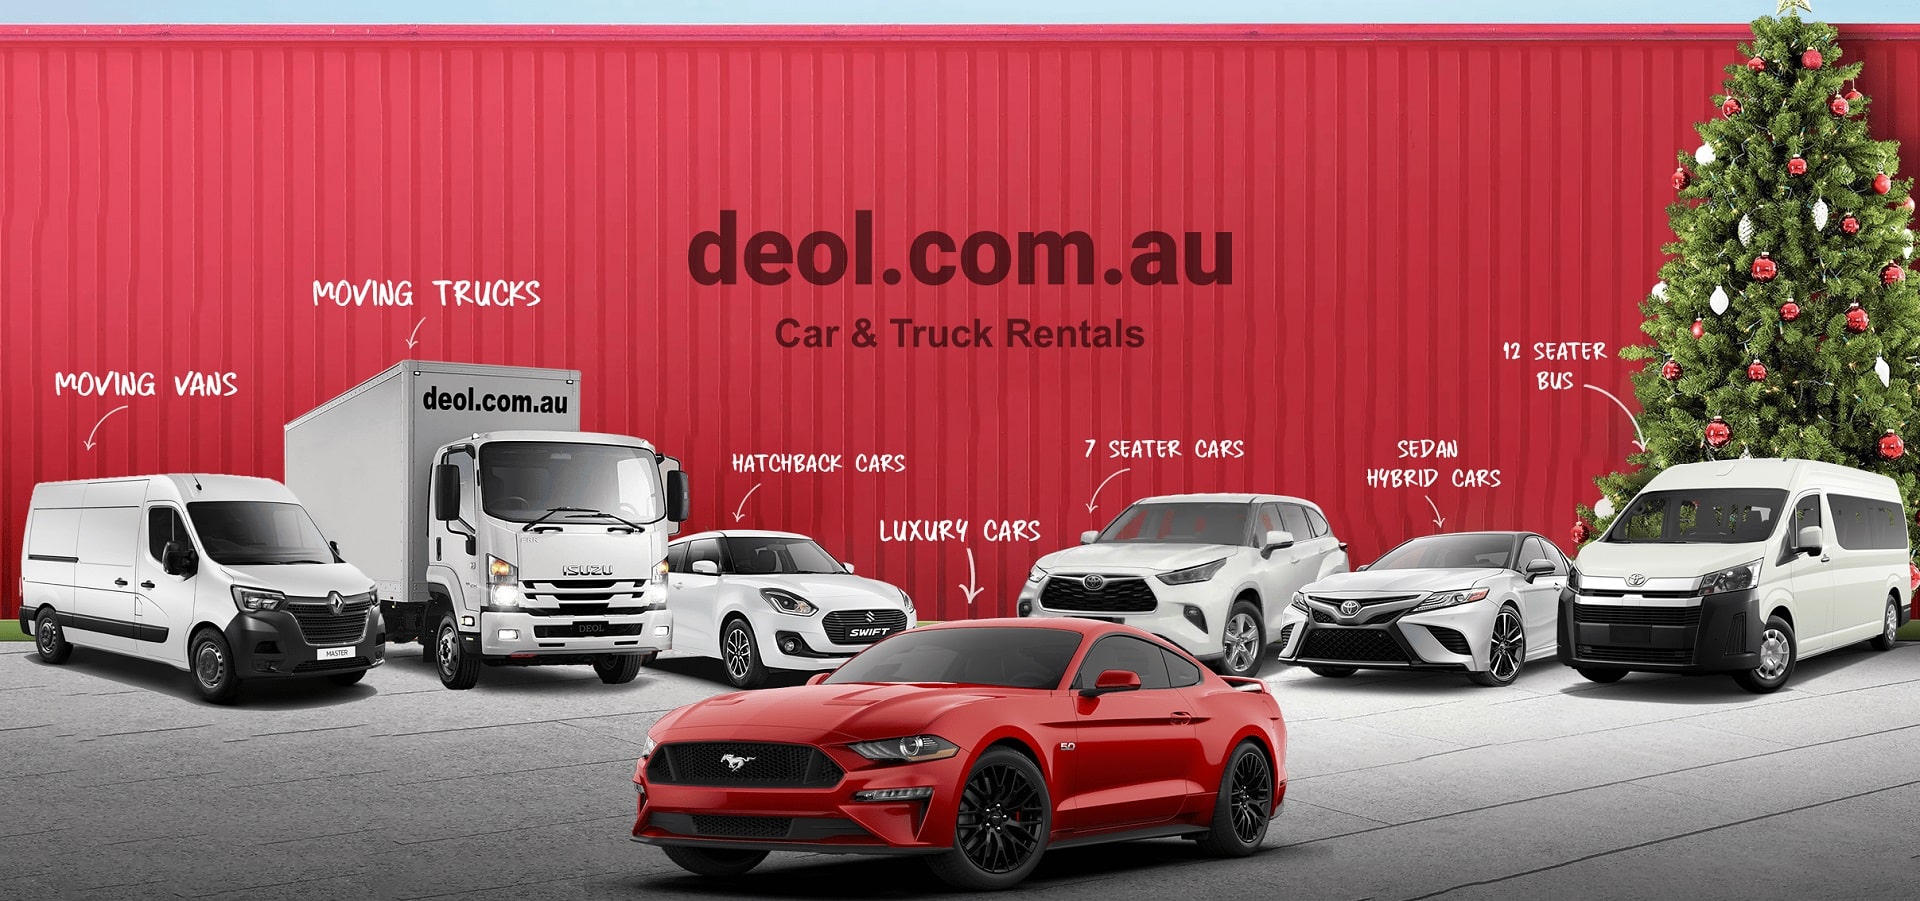 truck rental in Melbourne - deol car and truck rentals